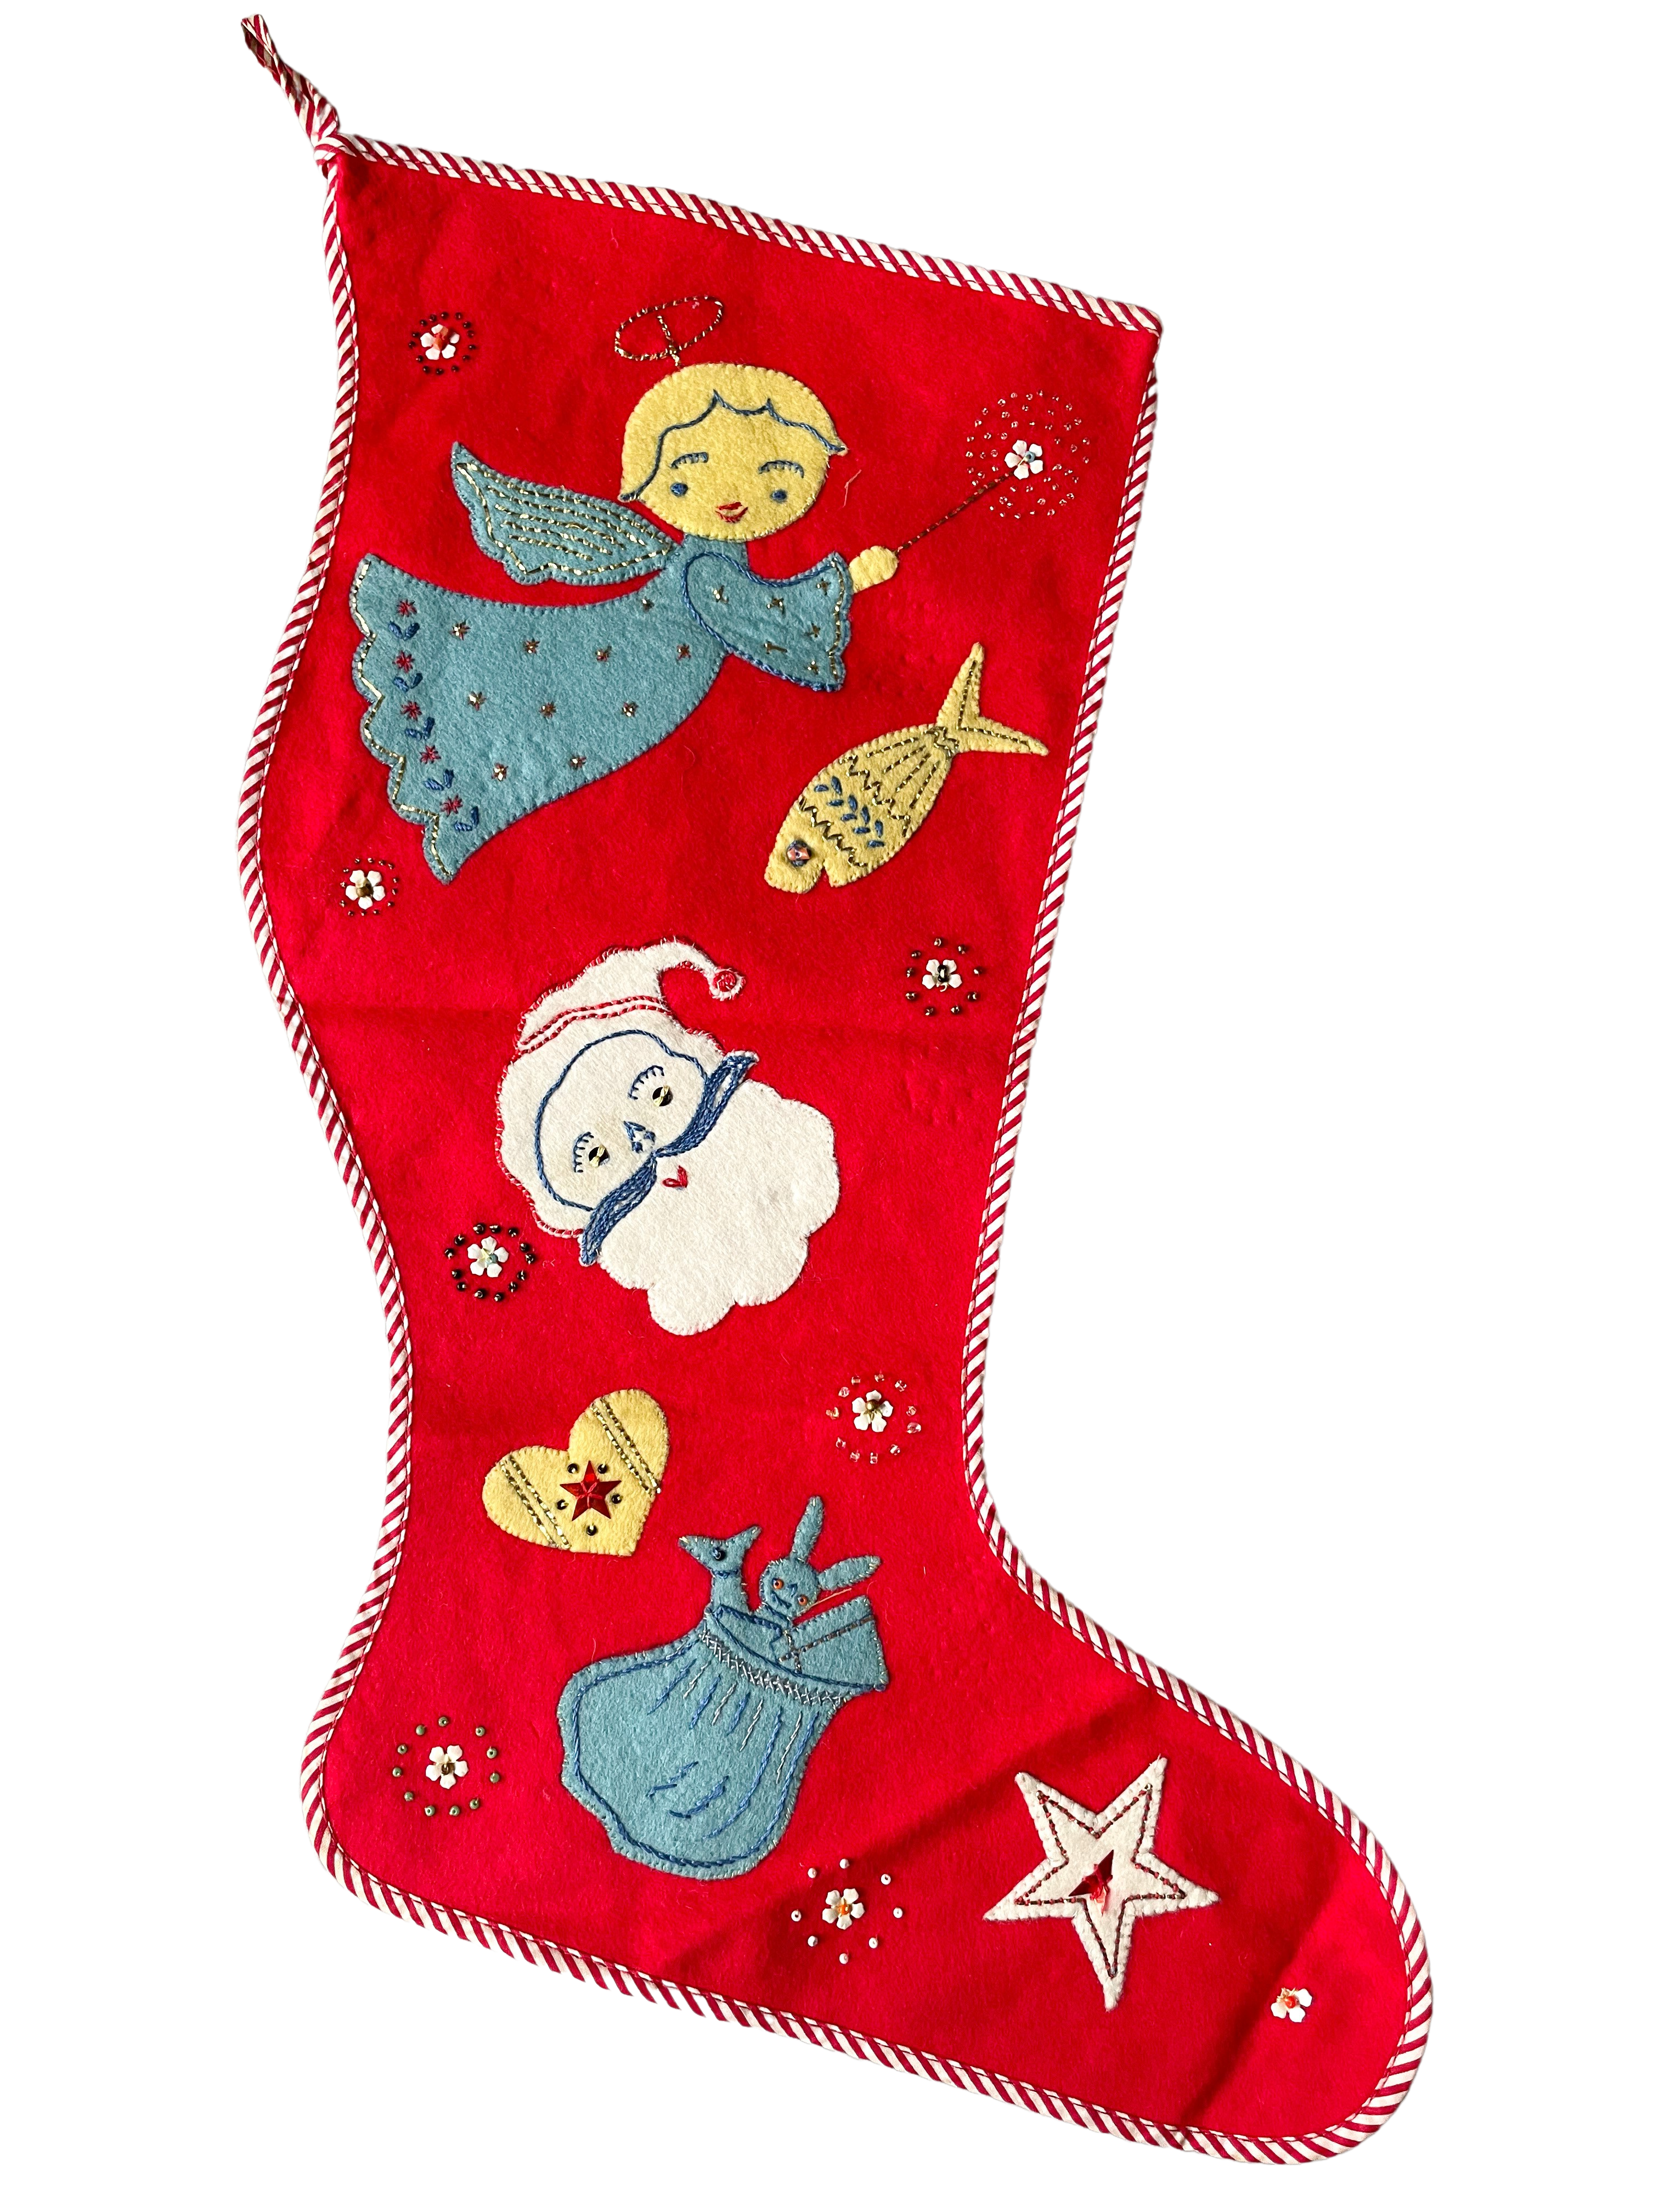 Vintage Christmas Stockings, 1960's Felt Christmas Stockings, Japan Santa  Stockings, Red and Green, 1960's Christmas Decor 